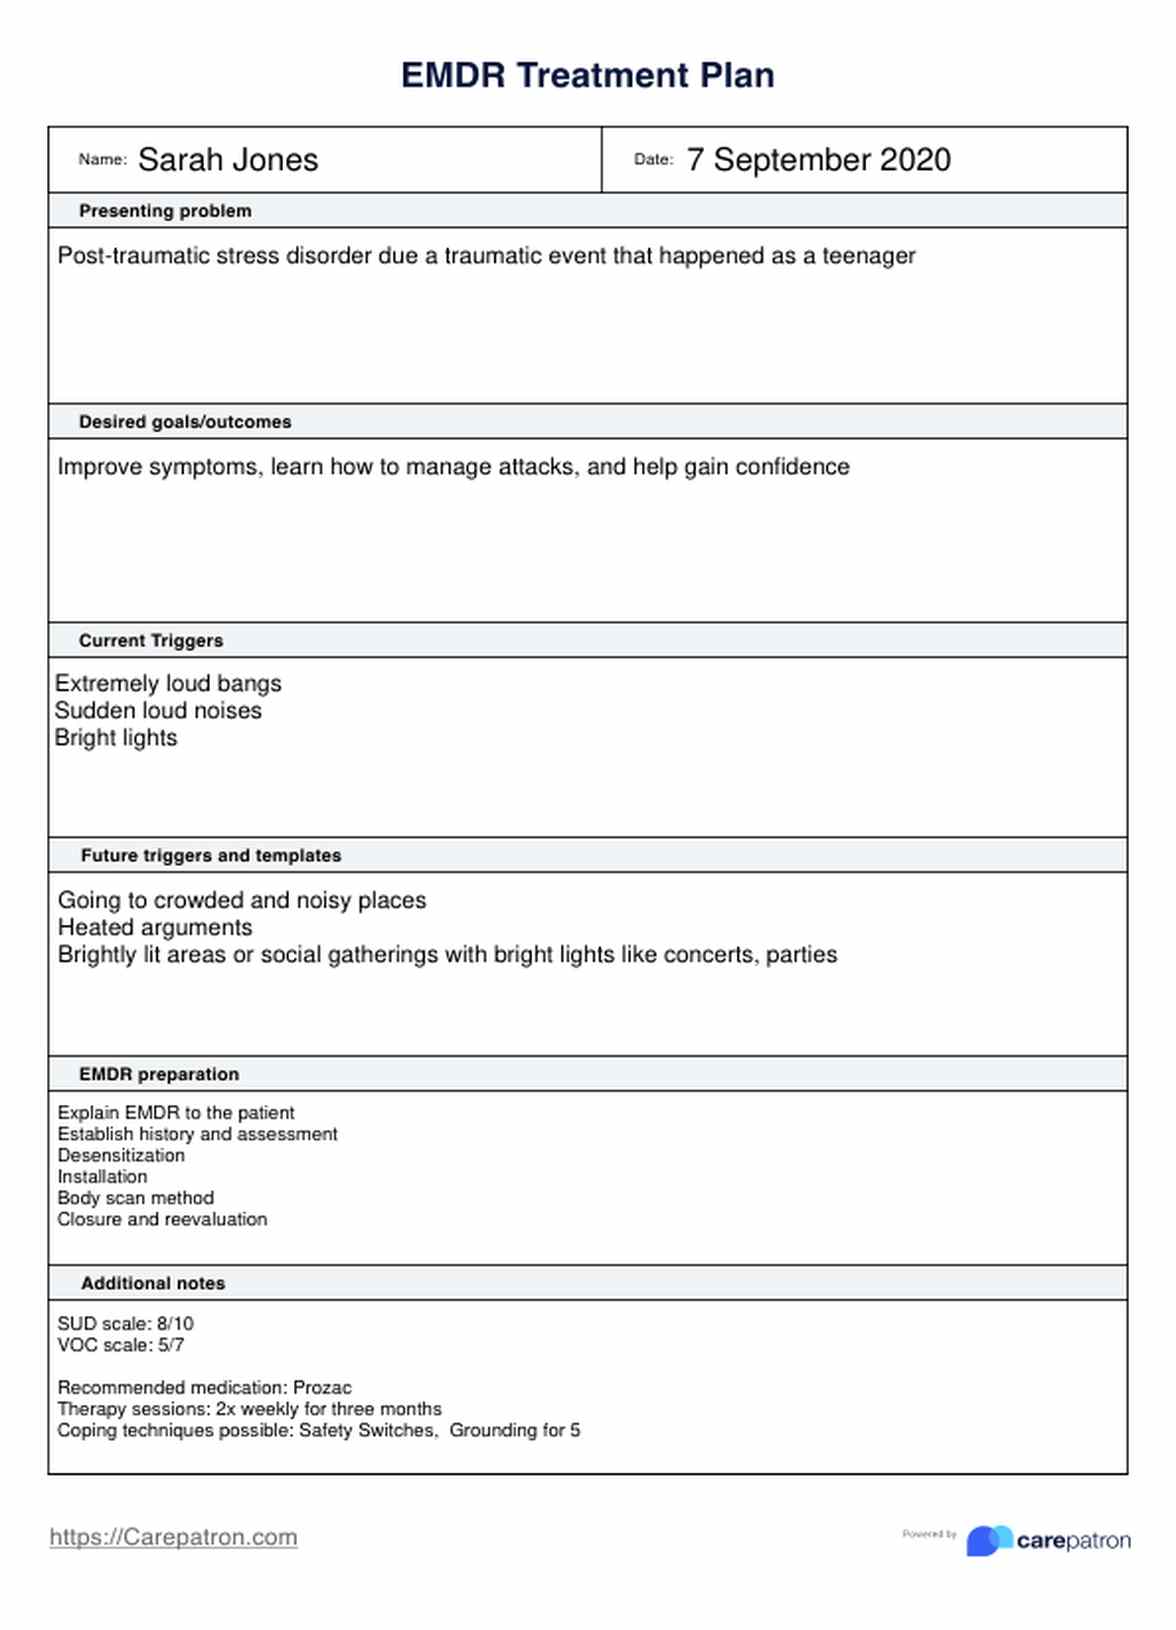 EMDR Treatment Plan PDF Example